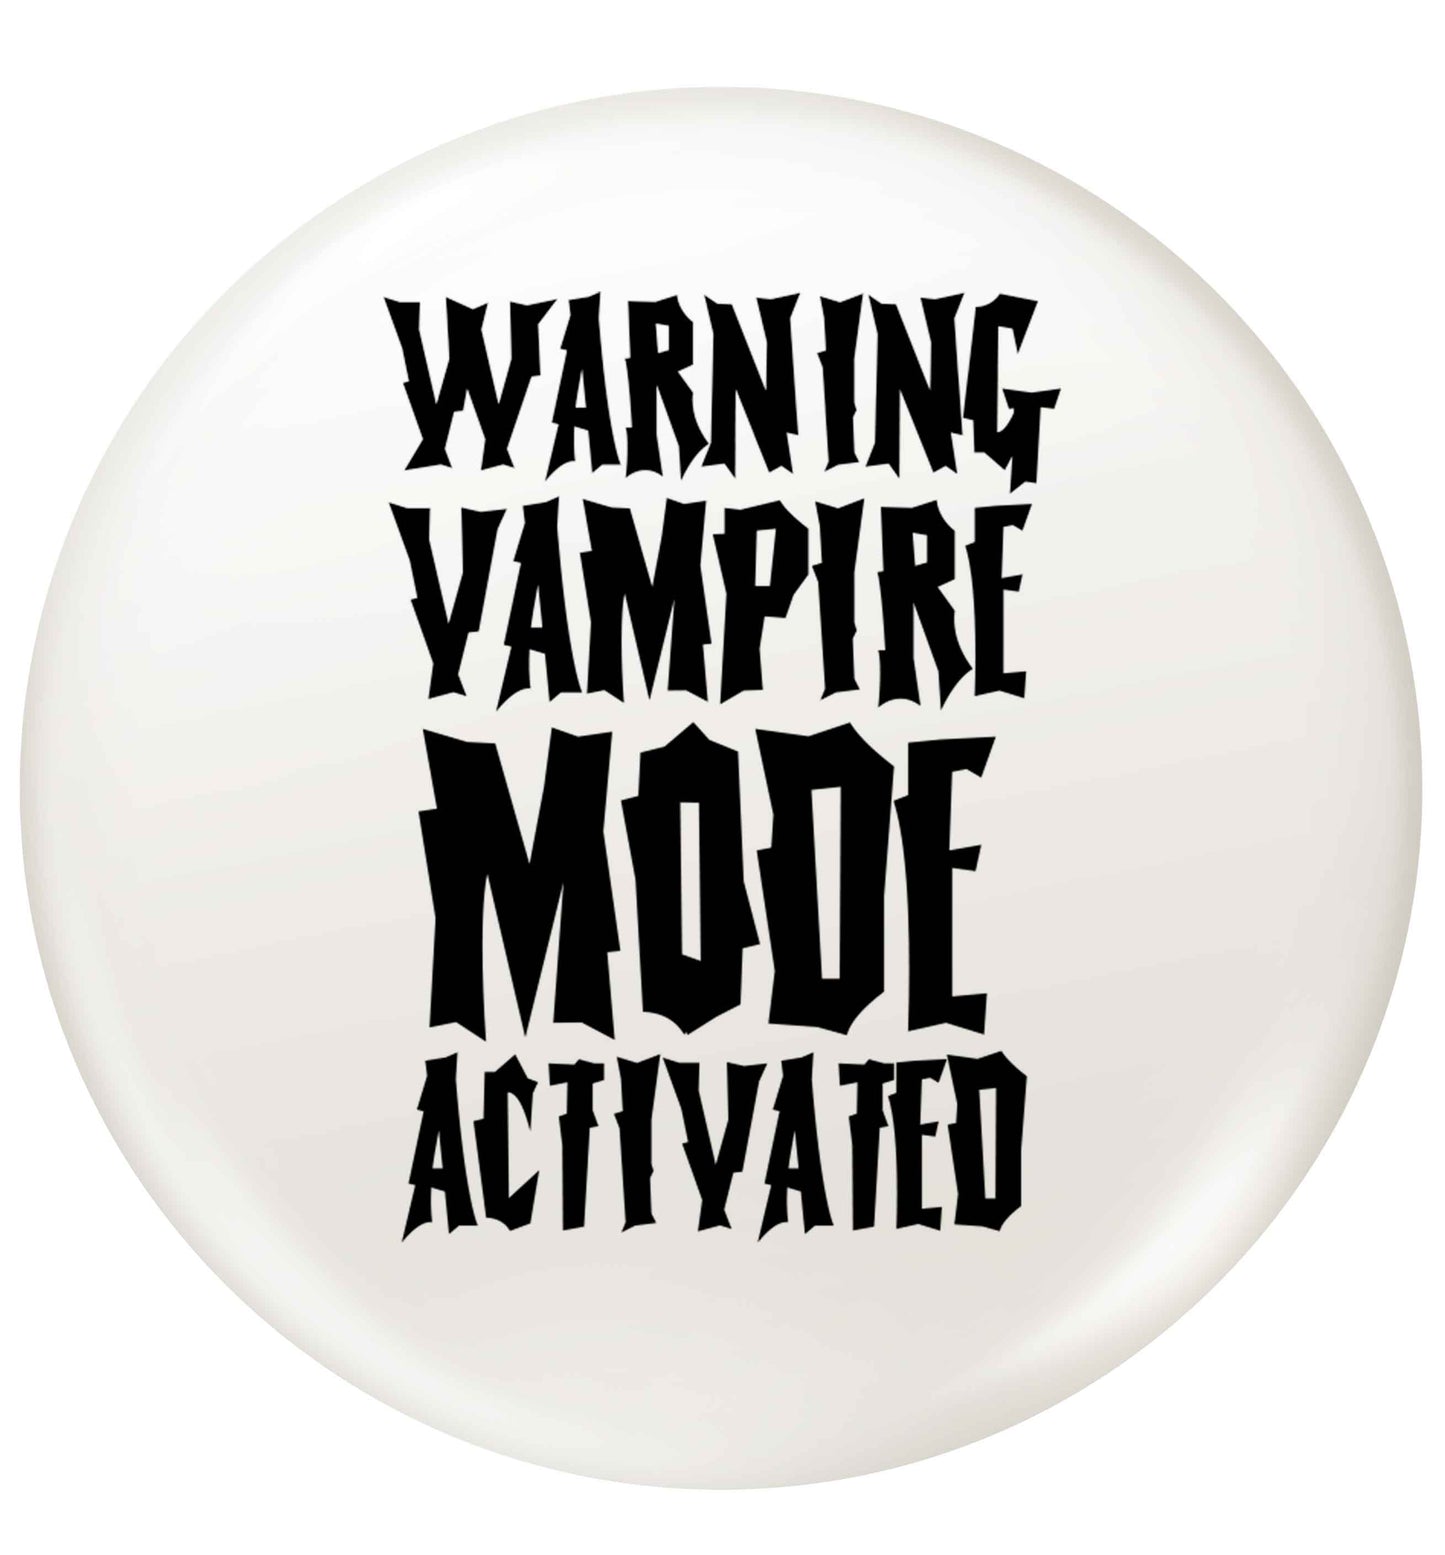 Warning vampire mode activated small 25mm Pin badge